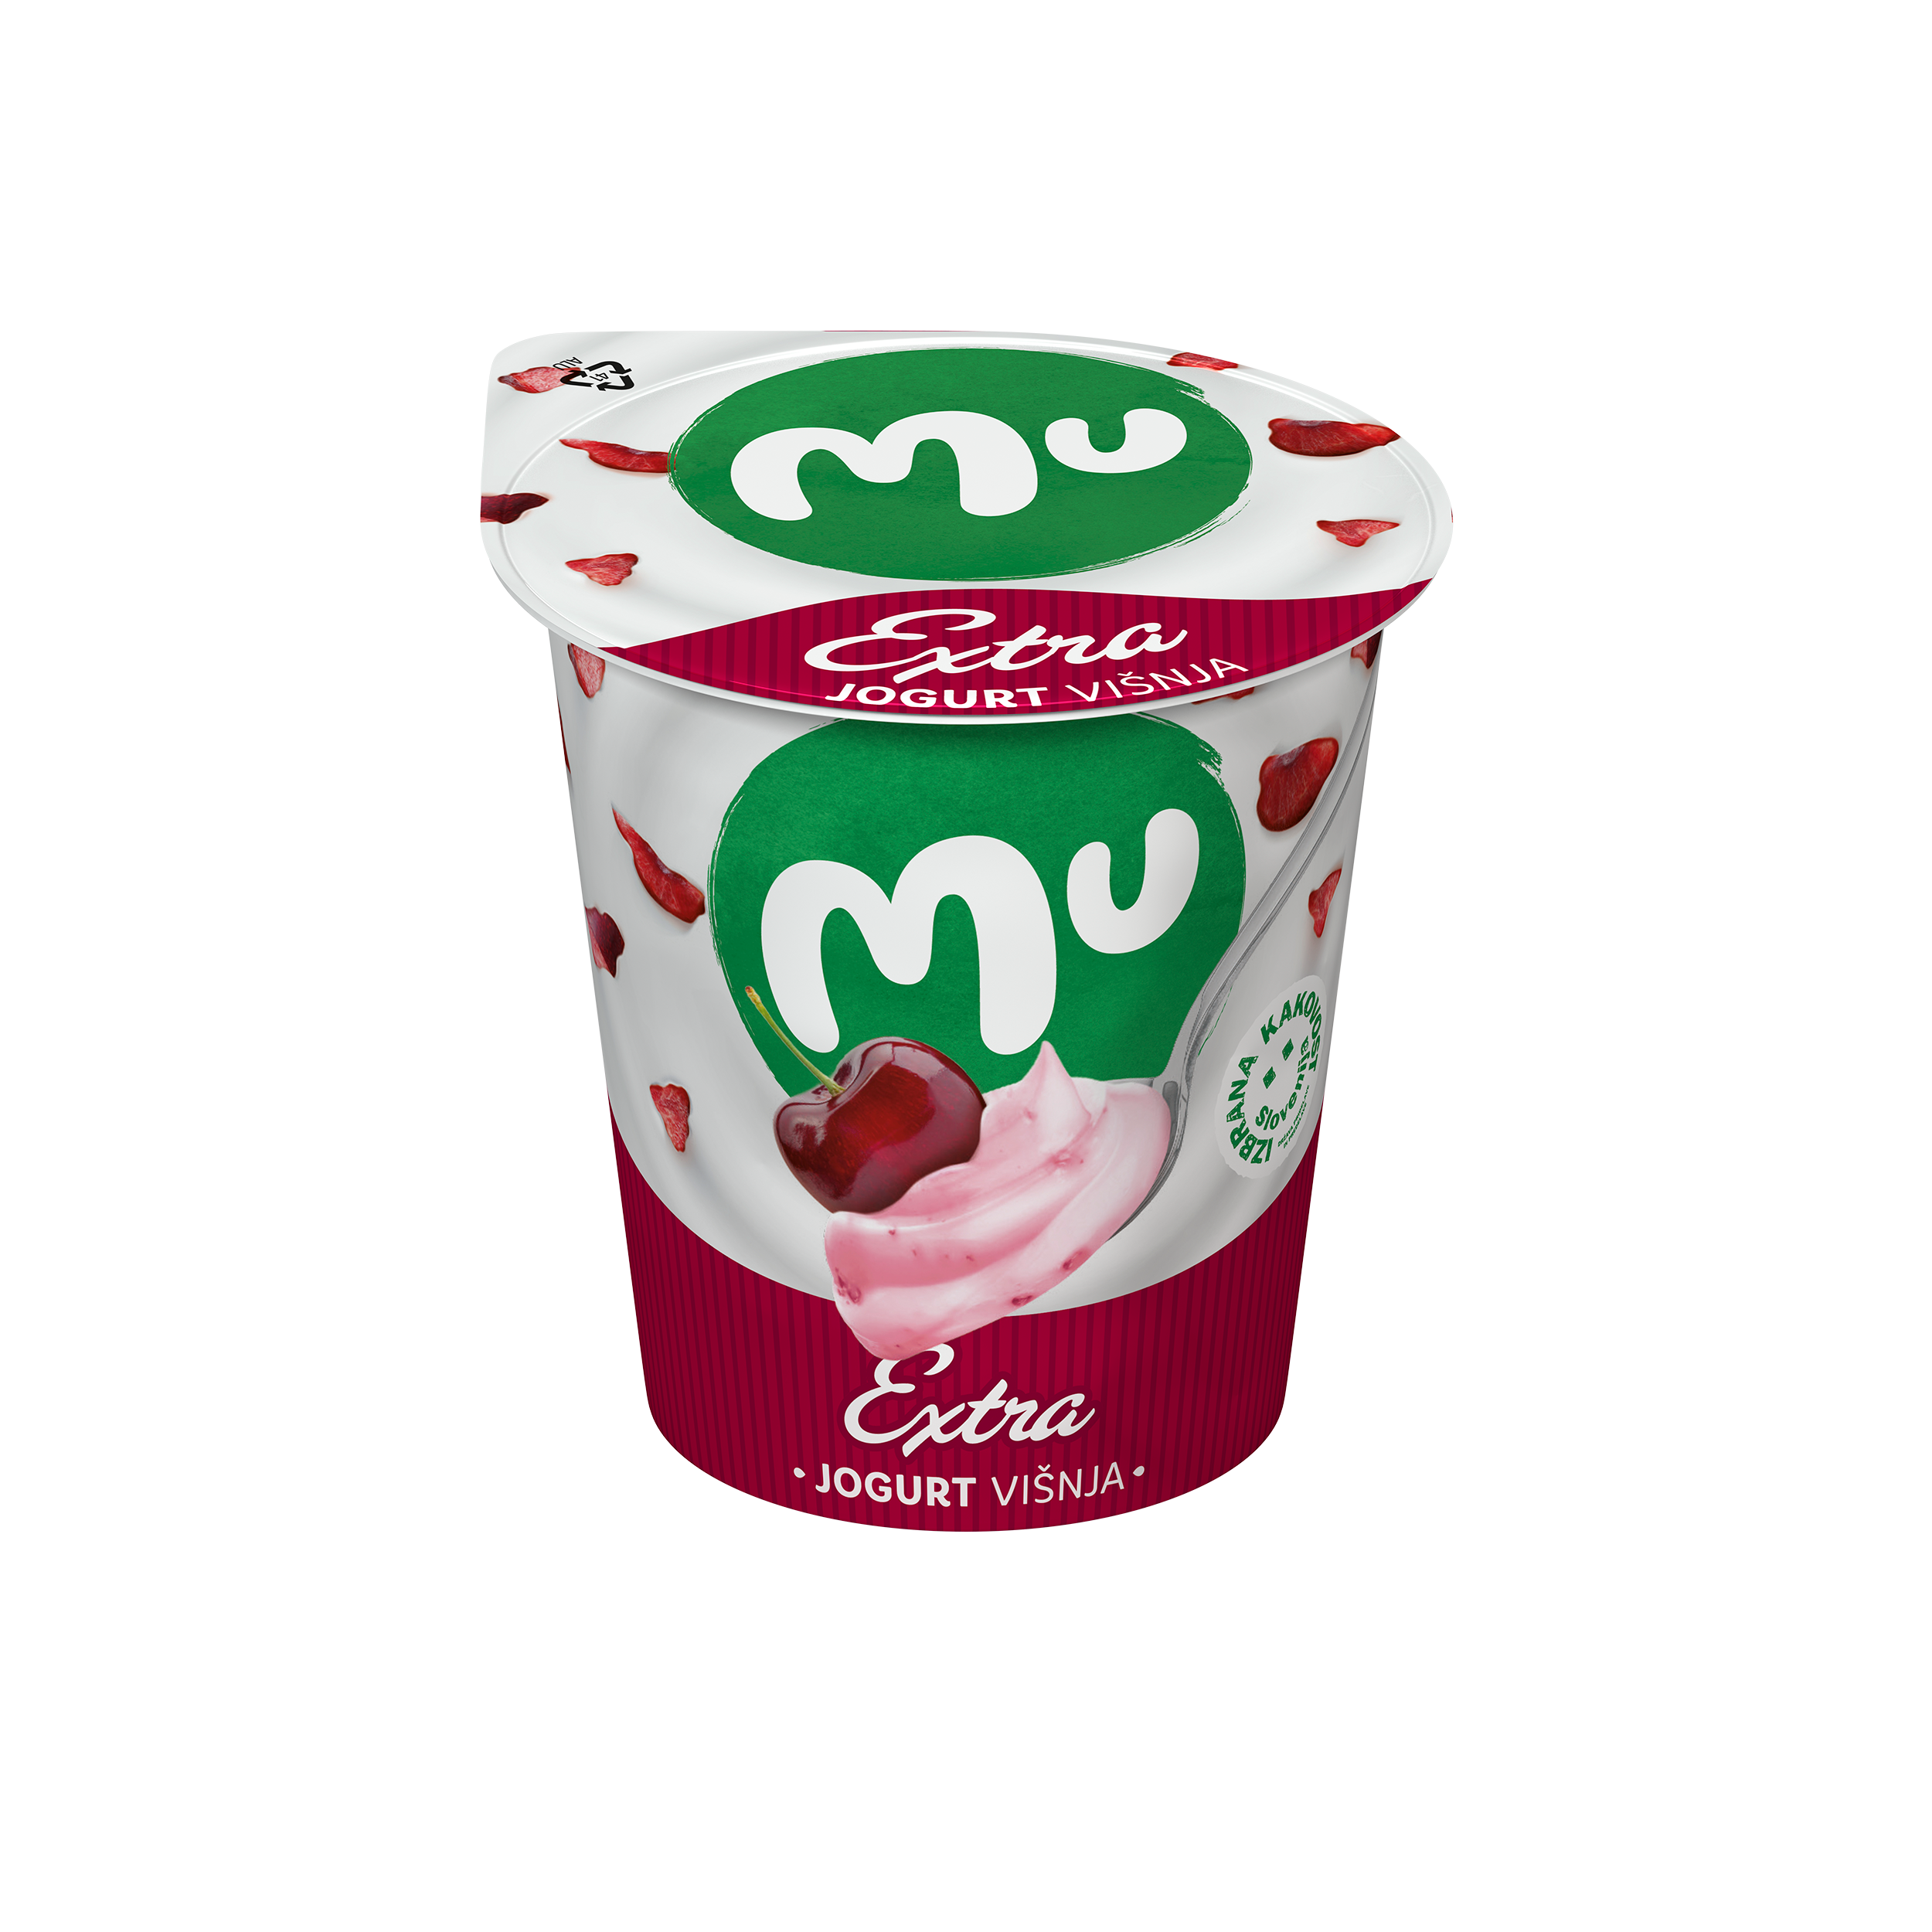 Mu Extra yoghurt; sour cherry